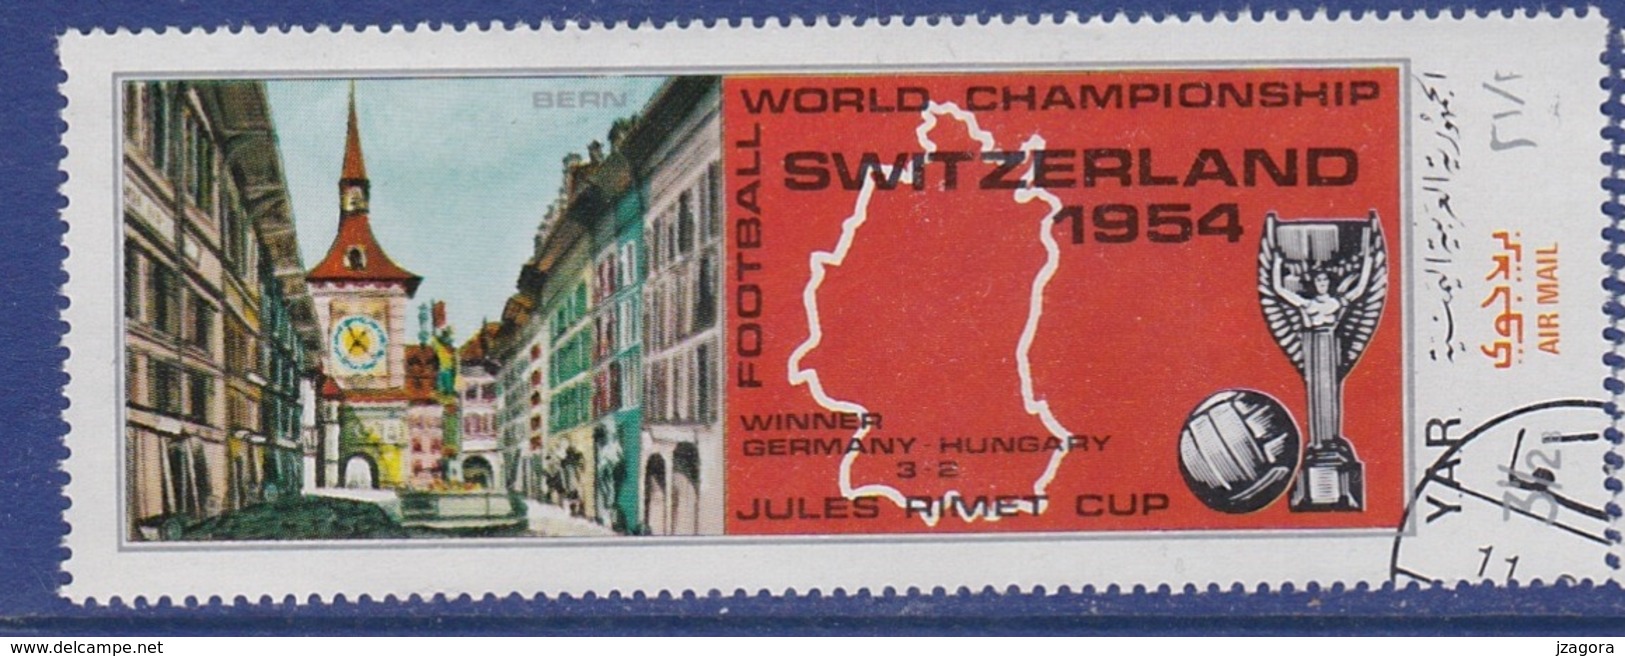 SOCCER FOOTBALL WORLD CHAMPIONSHIP MUNDIAL SWITZERLAND 1954 - YAR YEMEN - 1954 – Schweiz